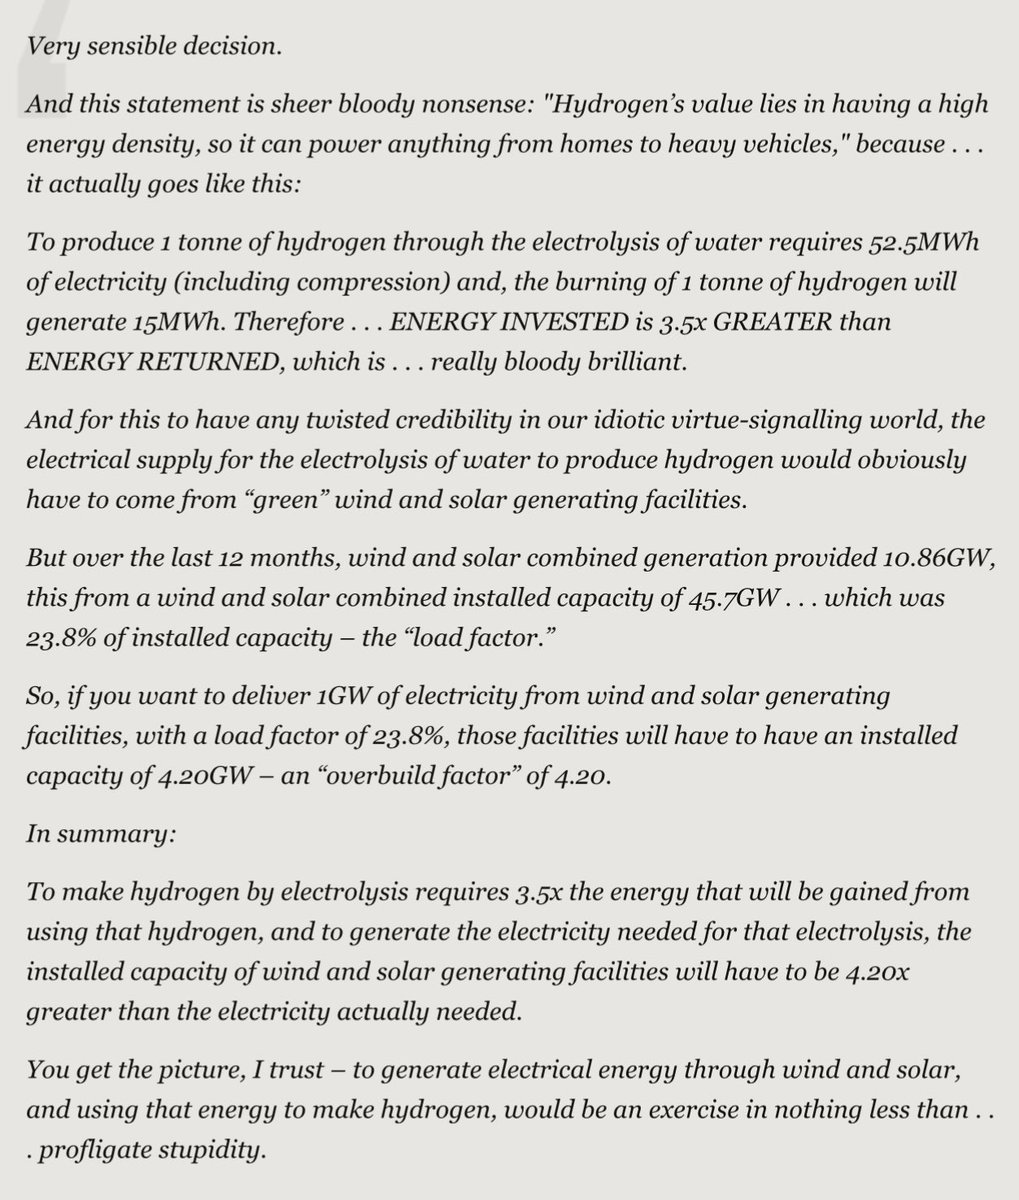 Hydrogen boondoggle canned.
#RenewableEnergy #ClimateScam #CostofNetZero #ClimateCrisis 

notalotofpeopleknowthat.wordpress.com/2024/05/12/hyd…